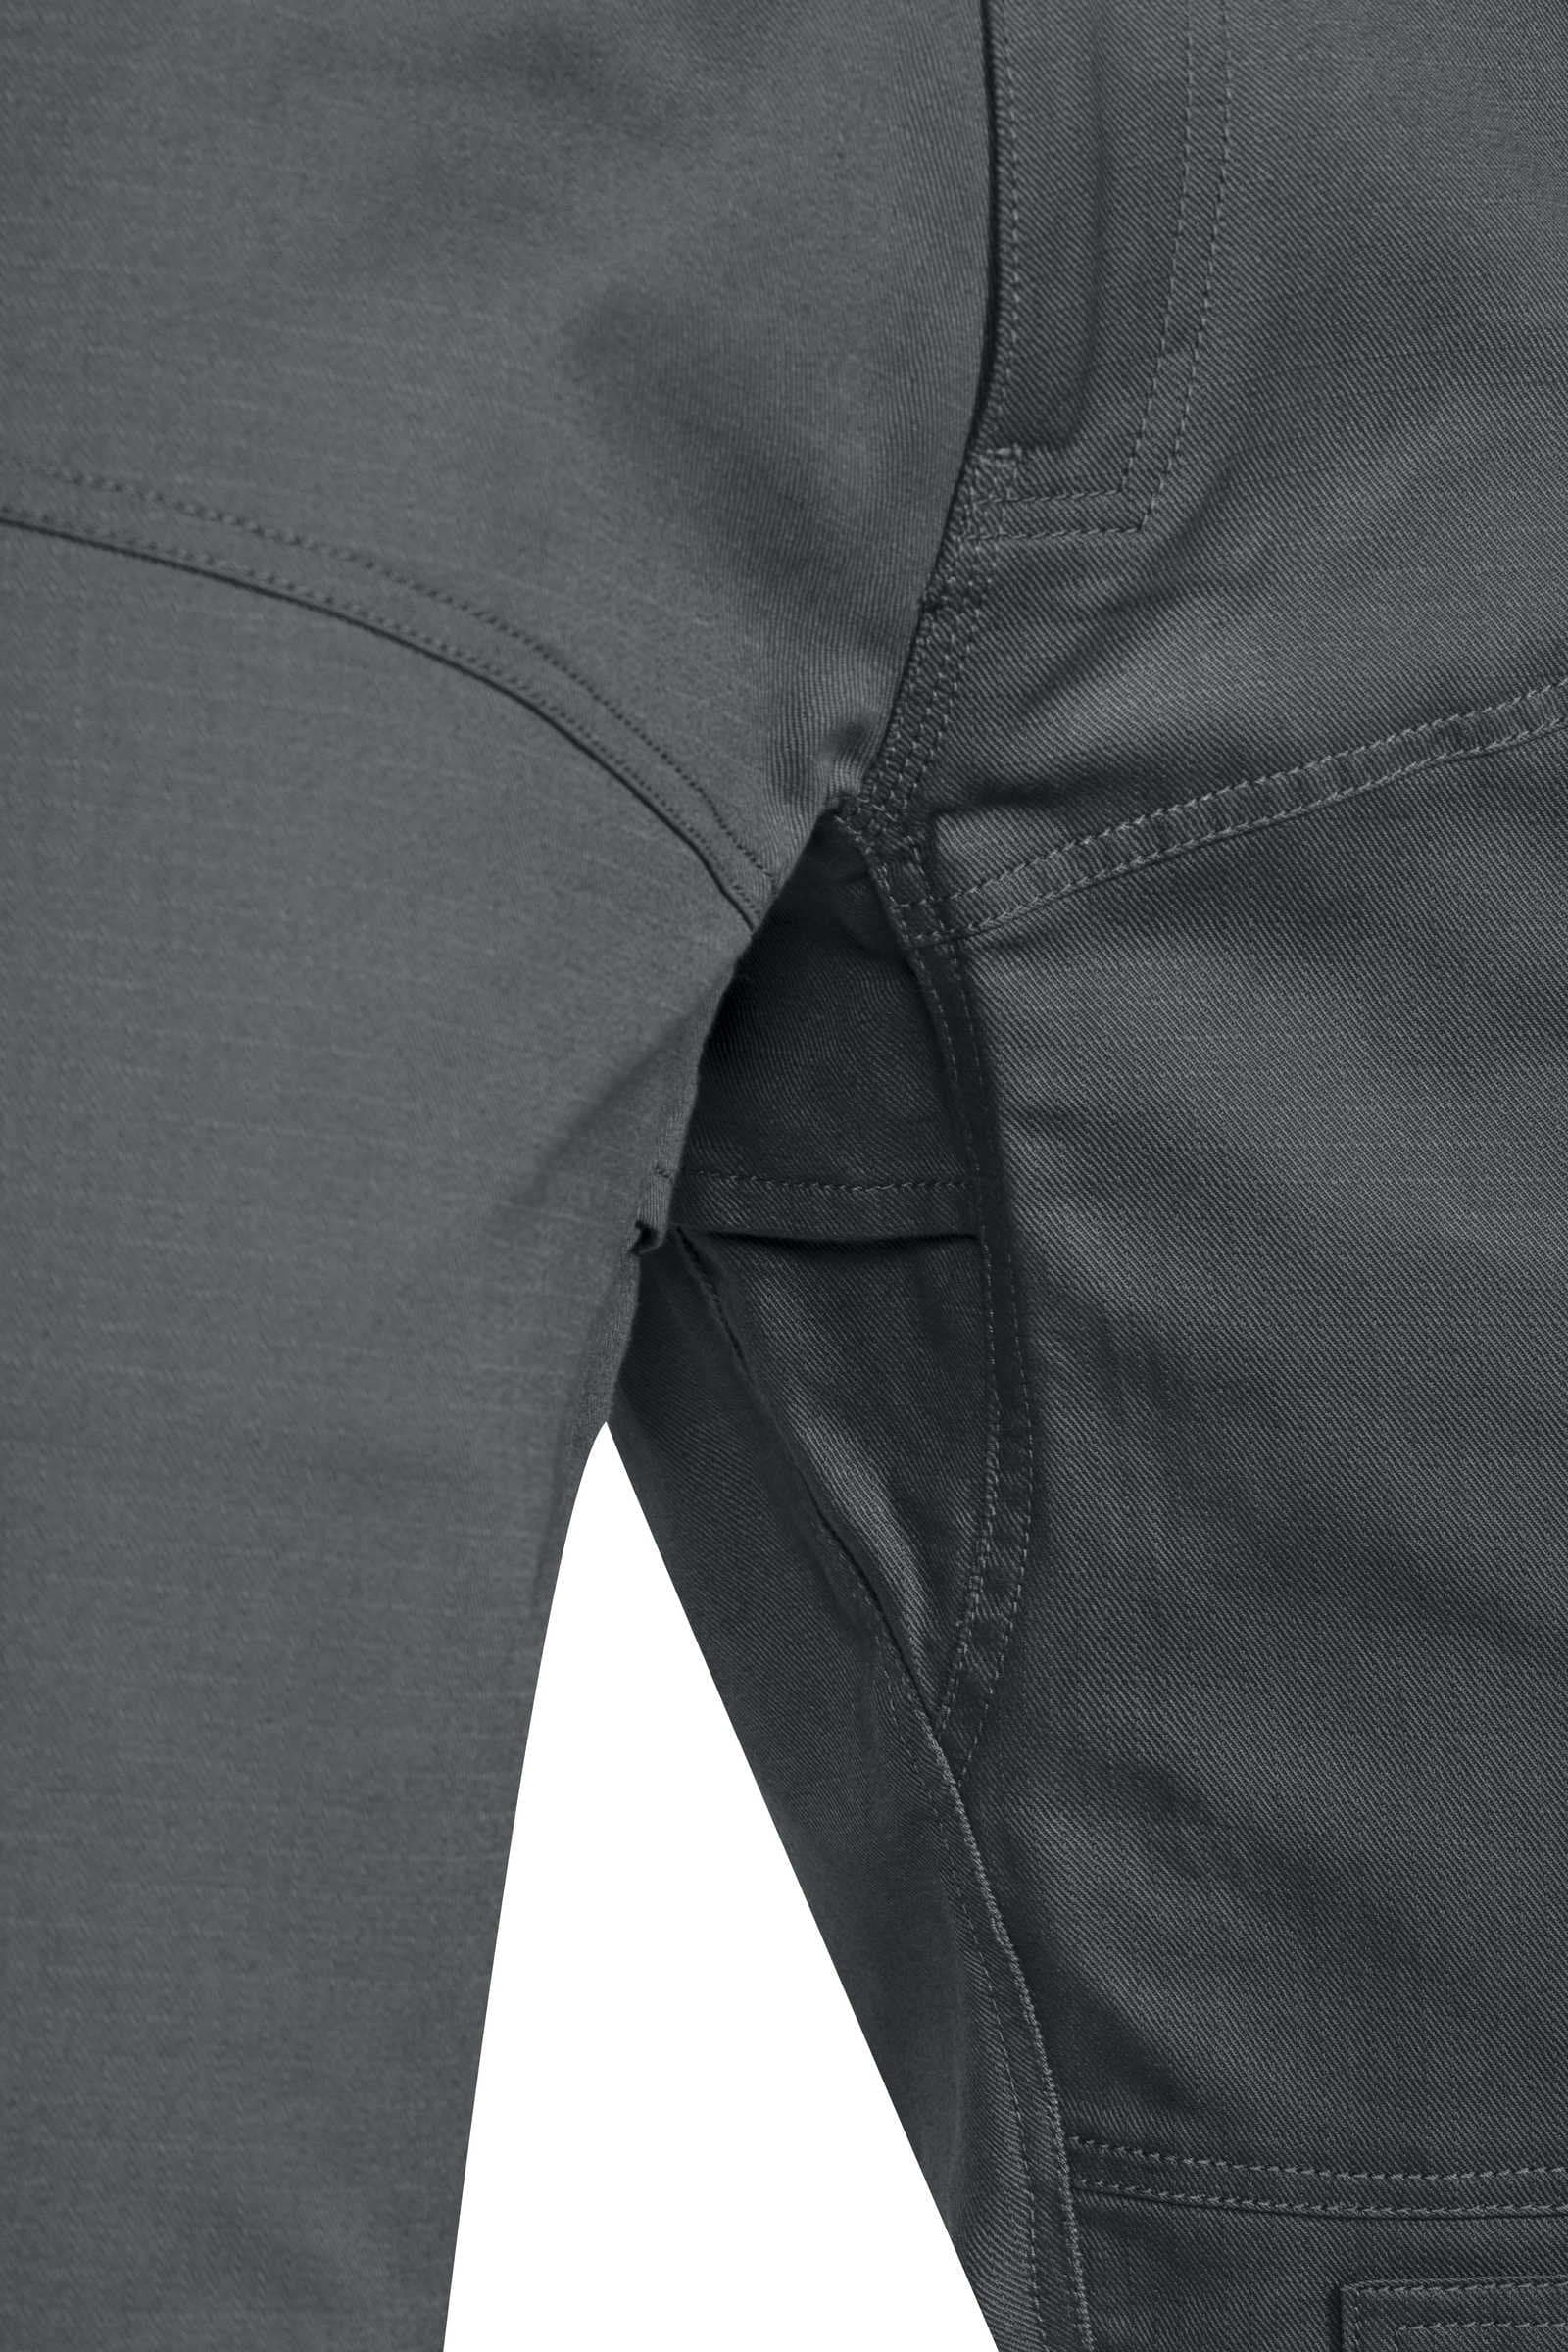 Bisley Ripstop Vented Work Pant (BP6474 ) - Trade Wear